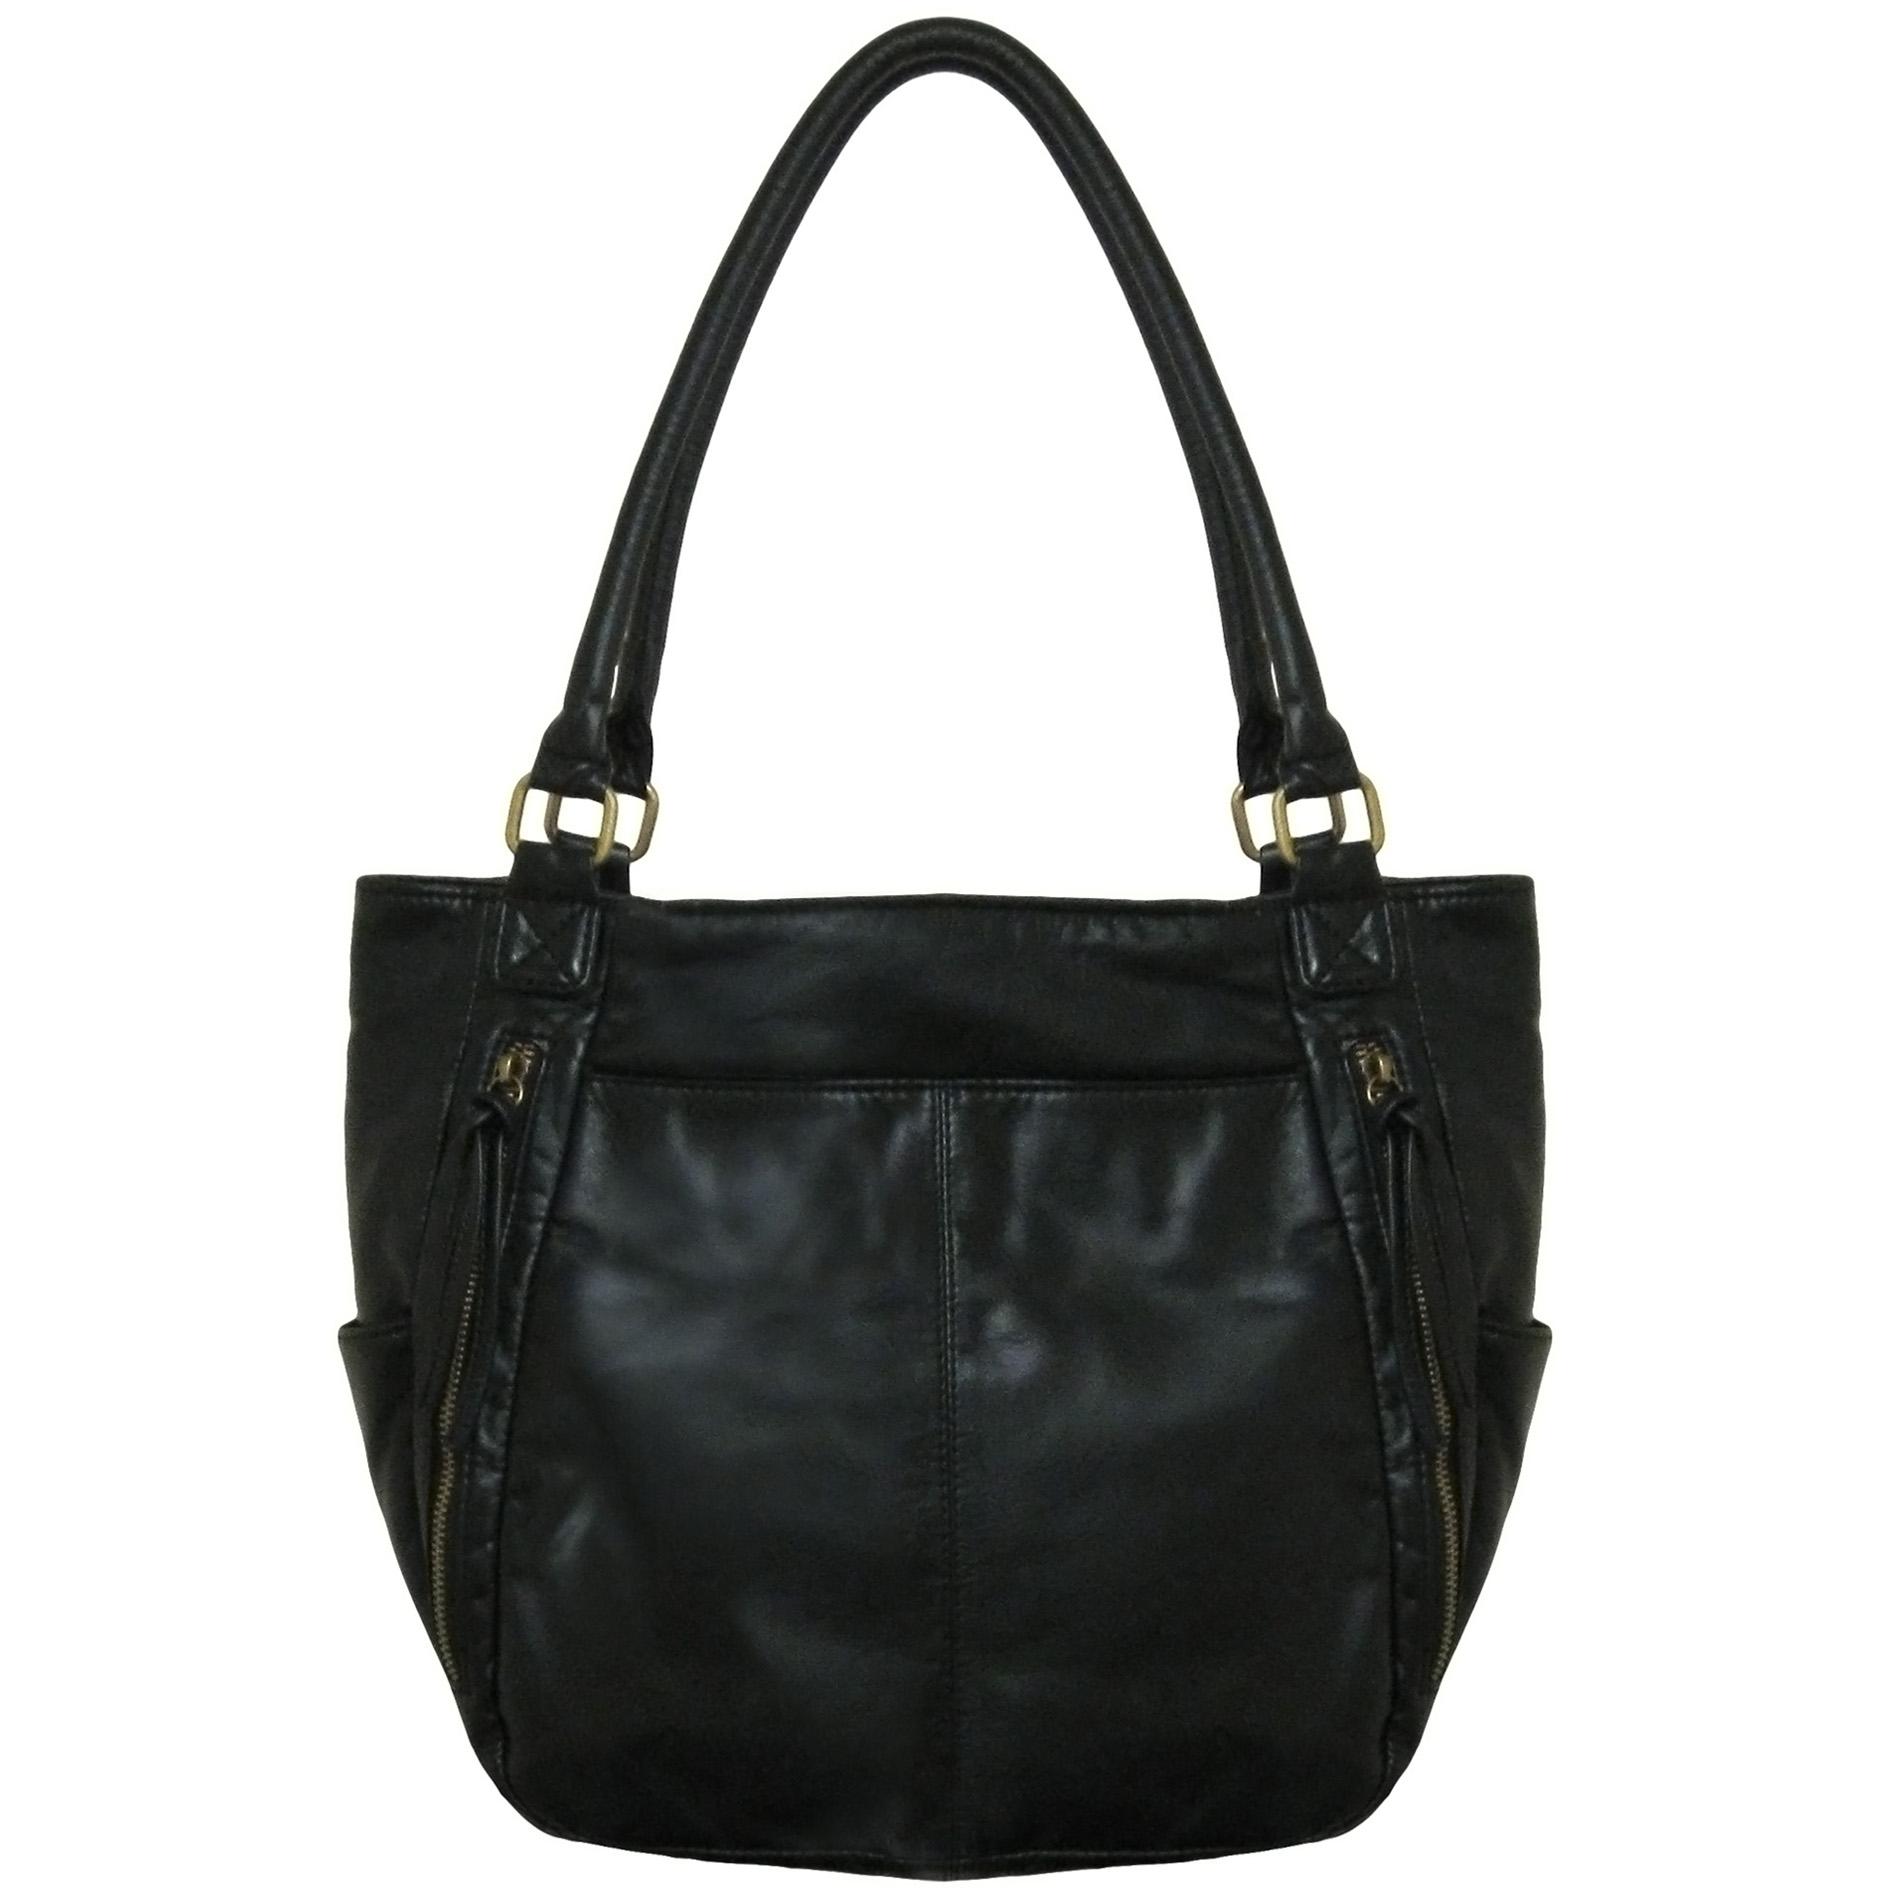 Covington Women's Shopper Handbag